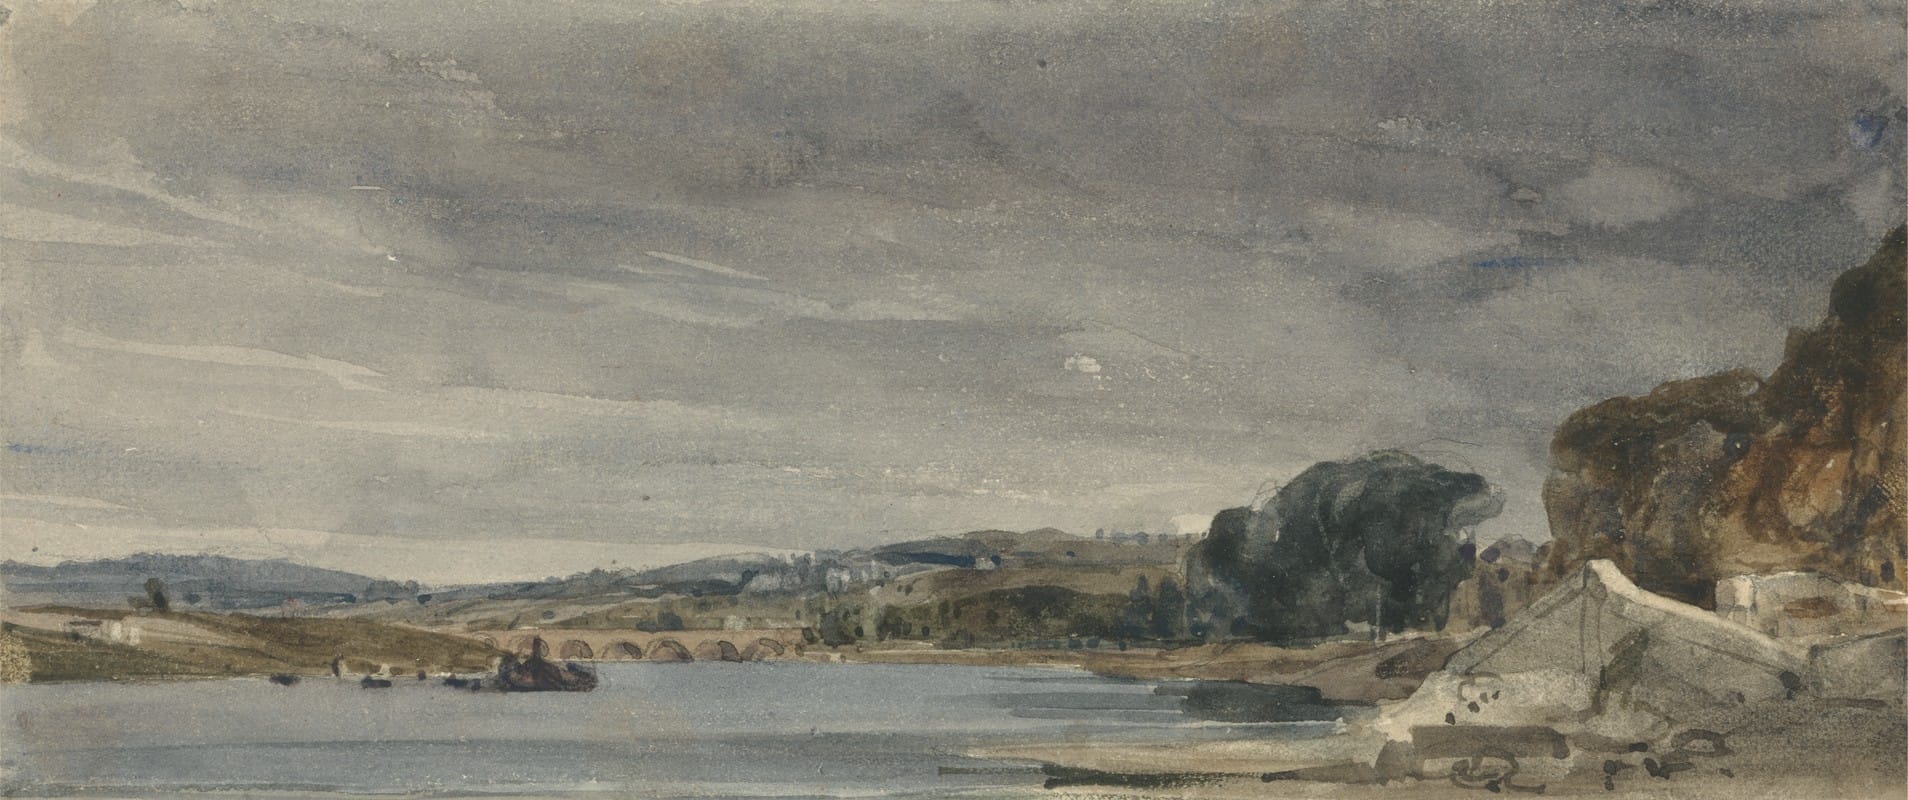 William Callow - The Seine at St. Cloud